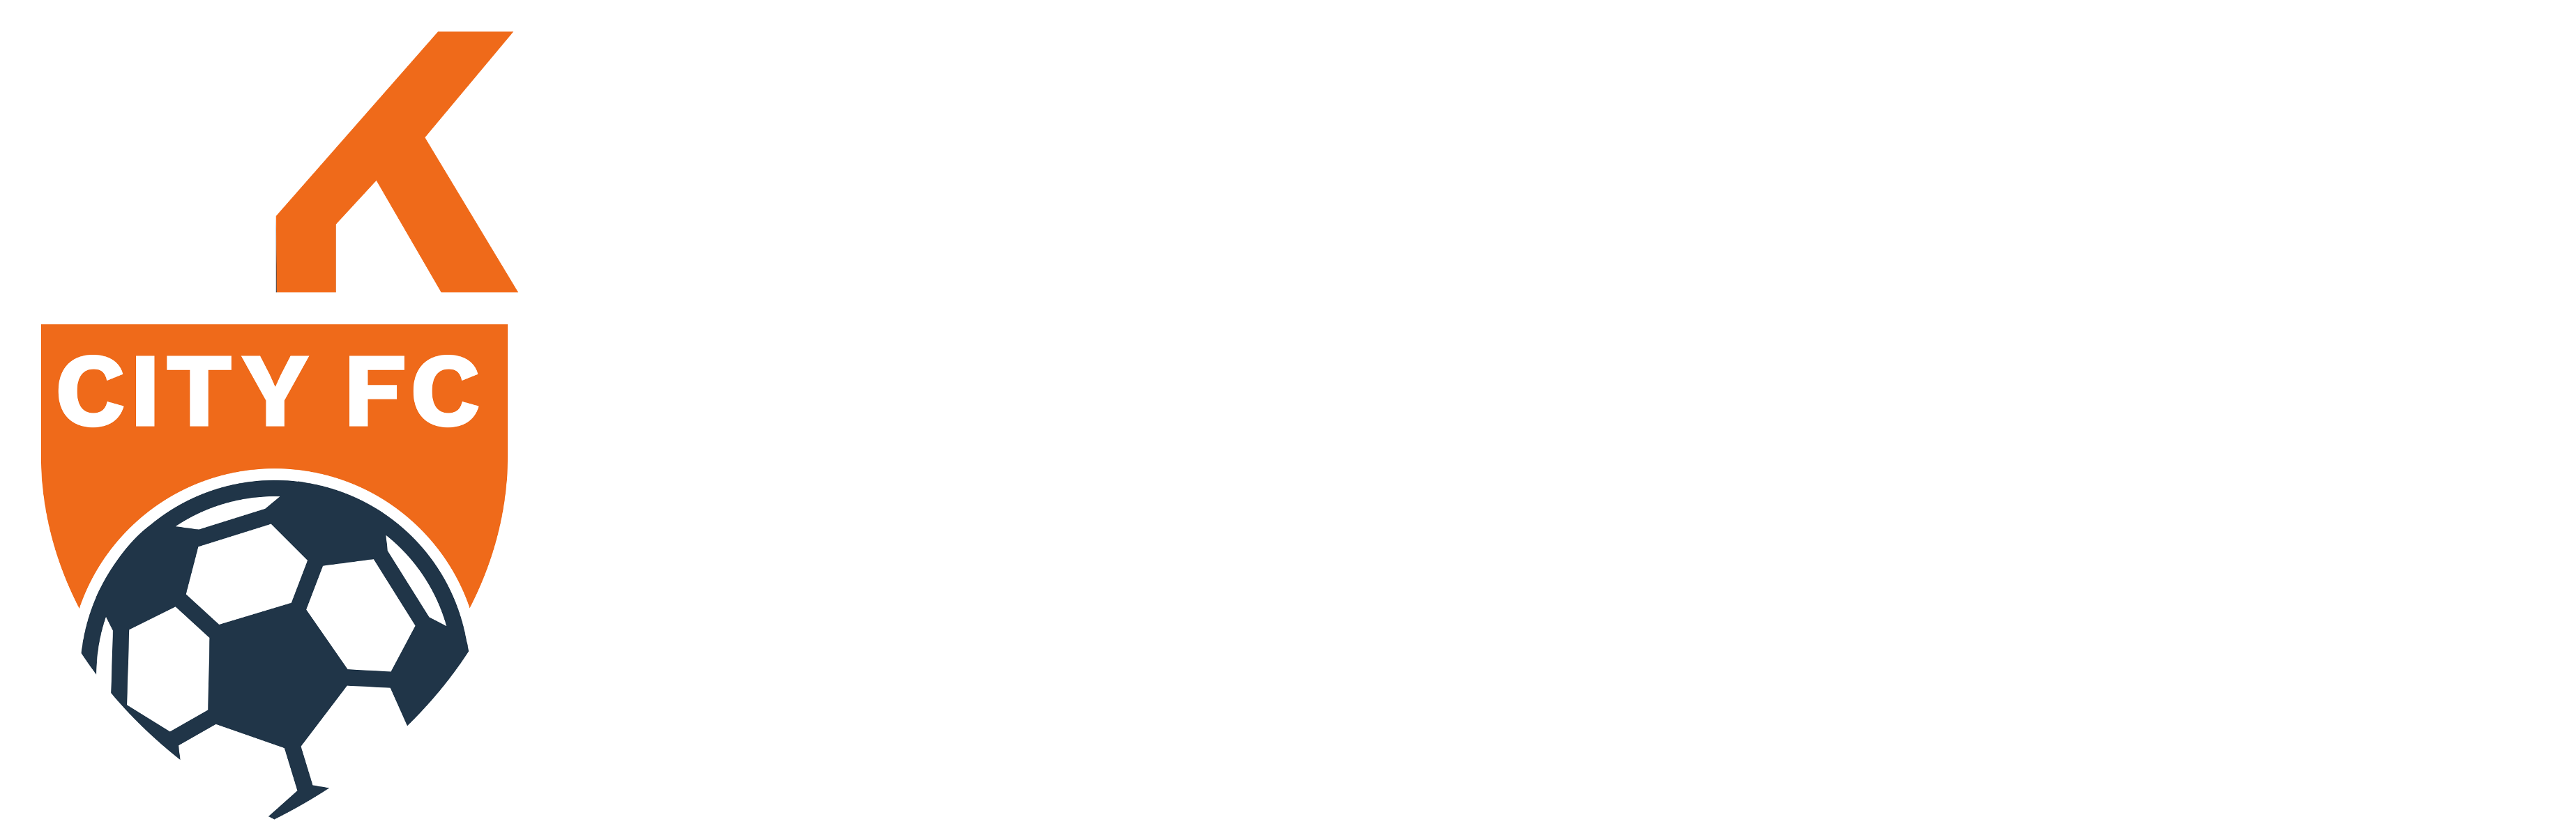 Milton Keynes City Football Club